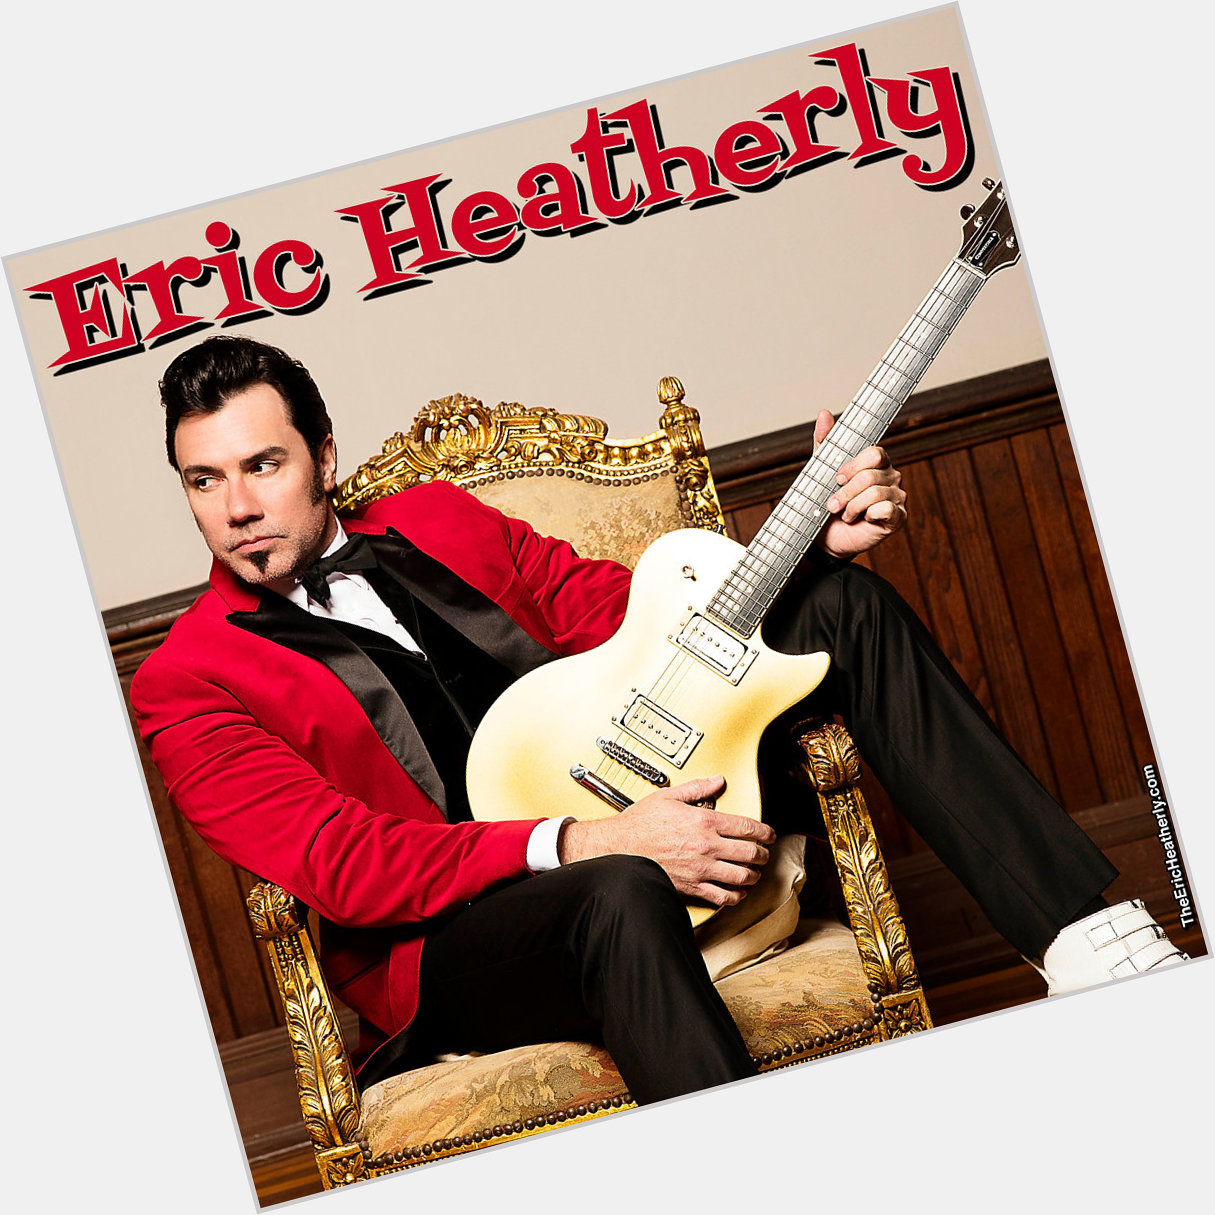 Eric Heatherly birthday 2015